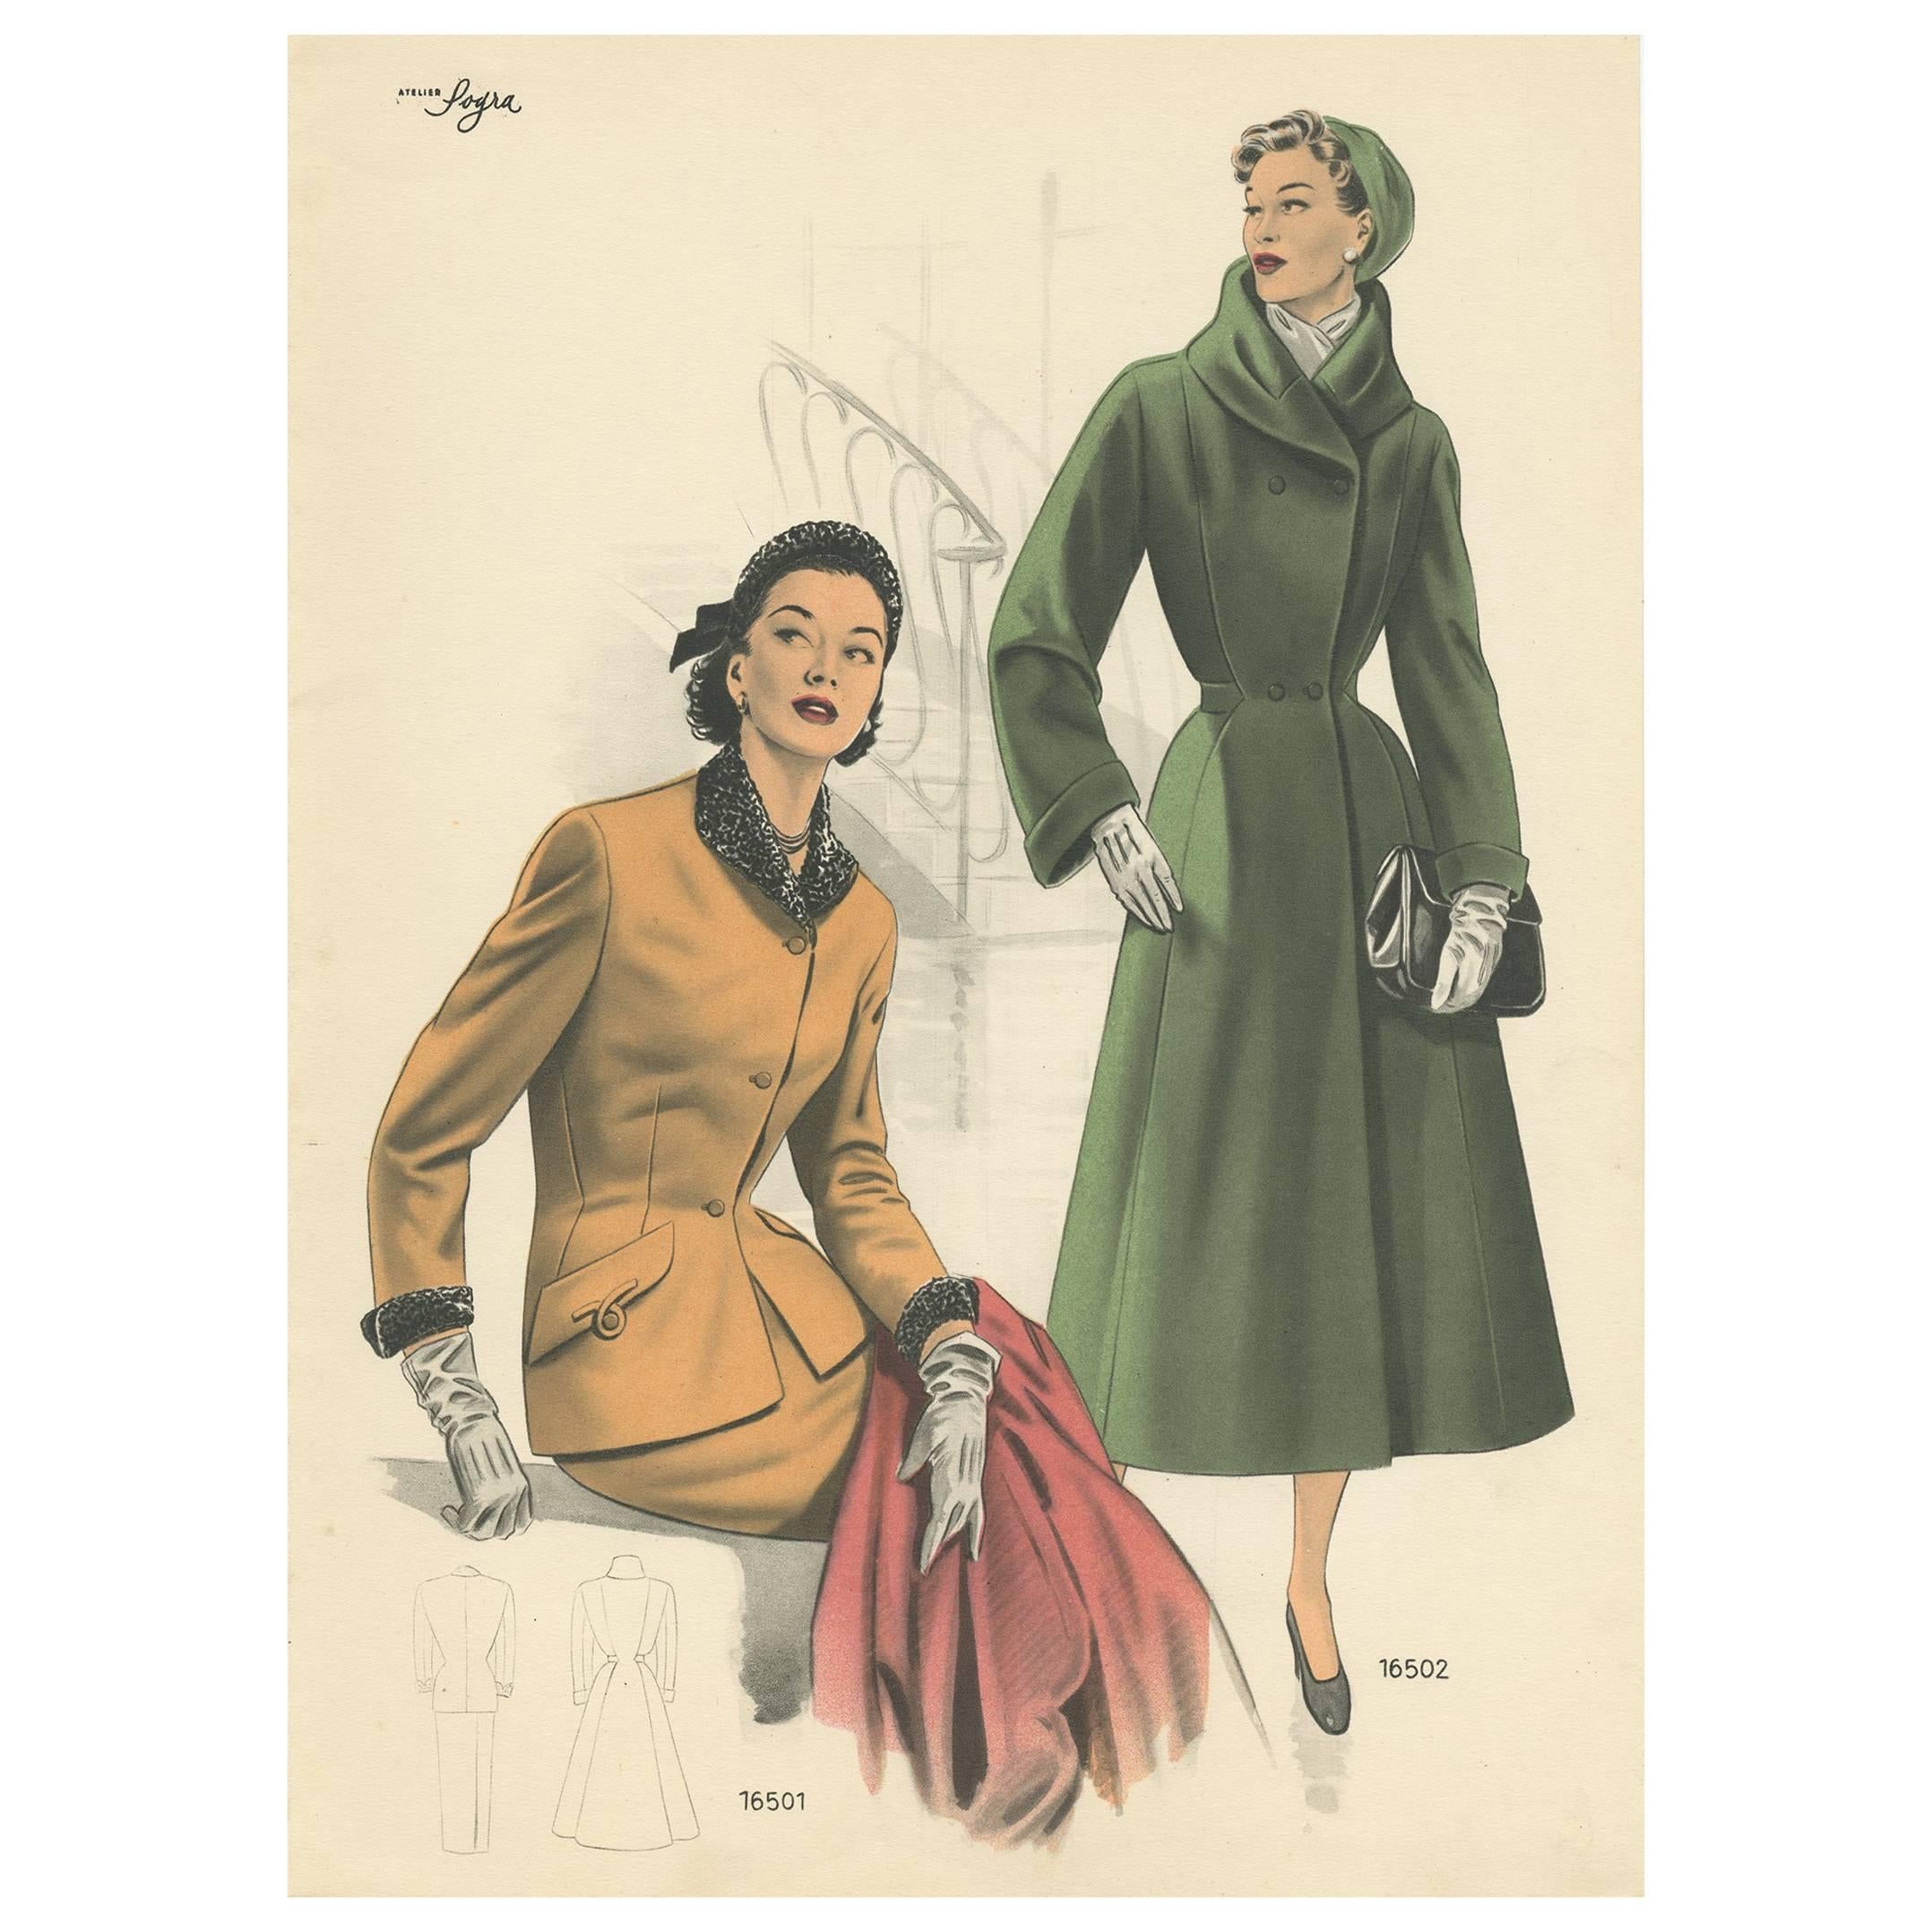 Vintage Fashion Print (Pl. 16501) published in Le Tailleur Moderne, 1954 For Sale